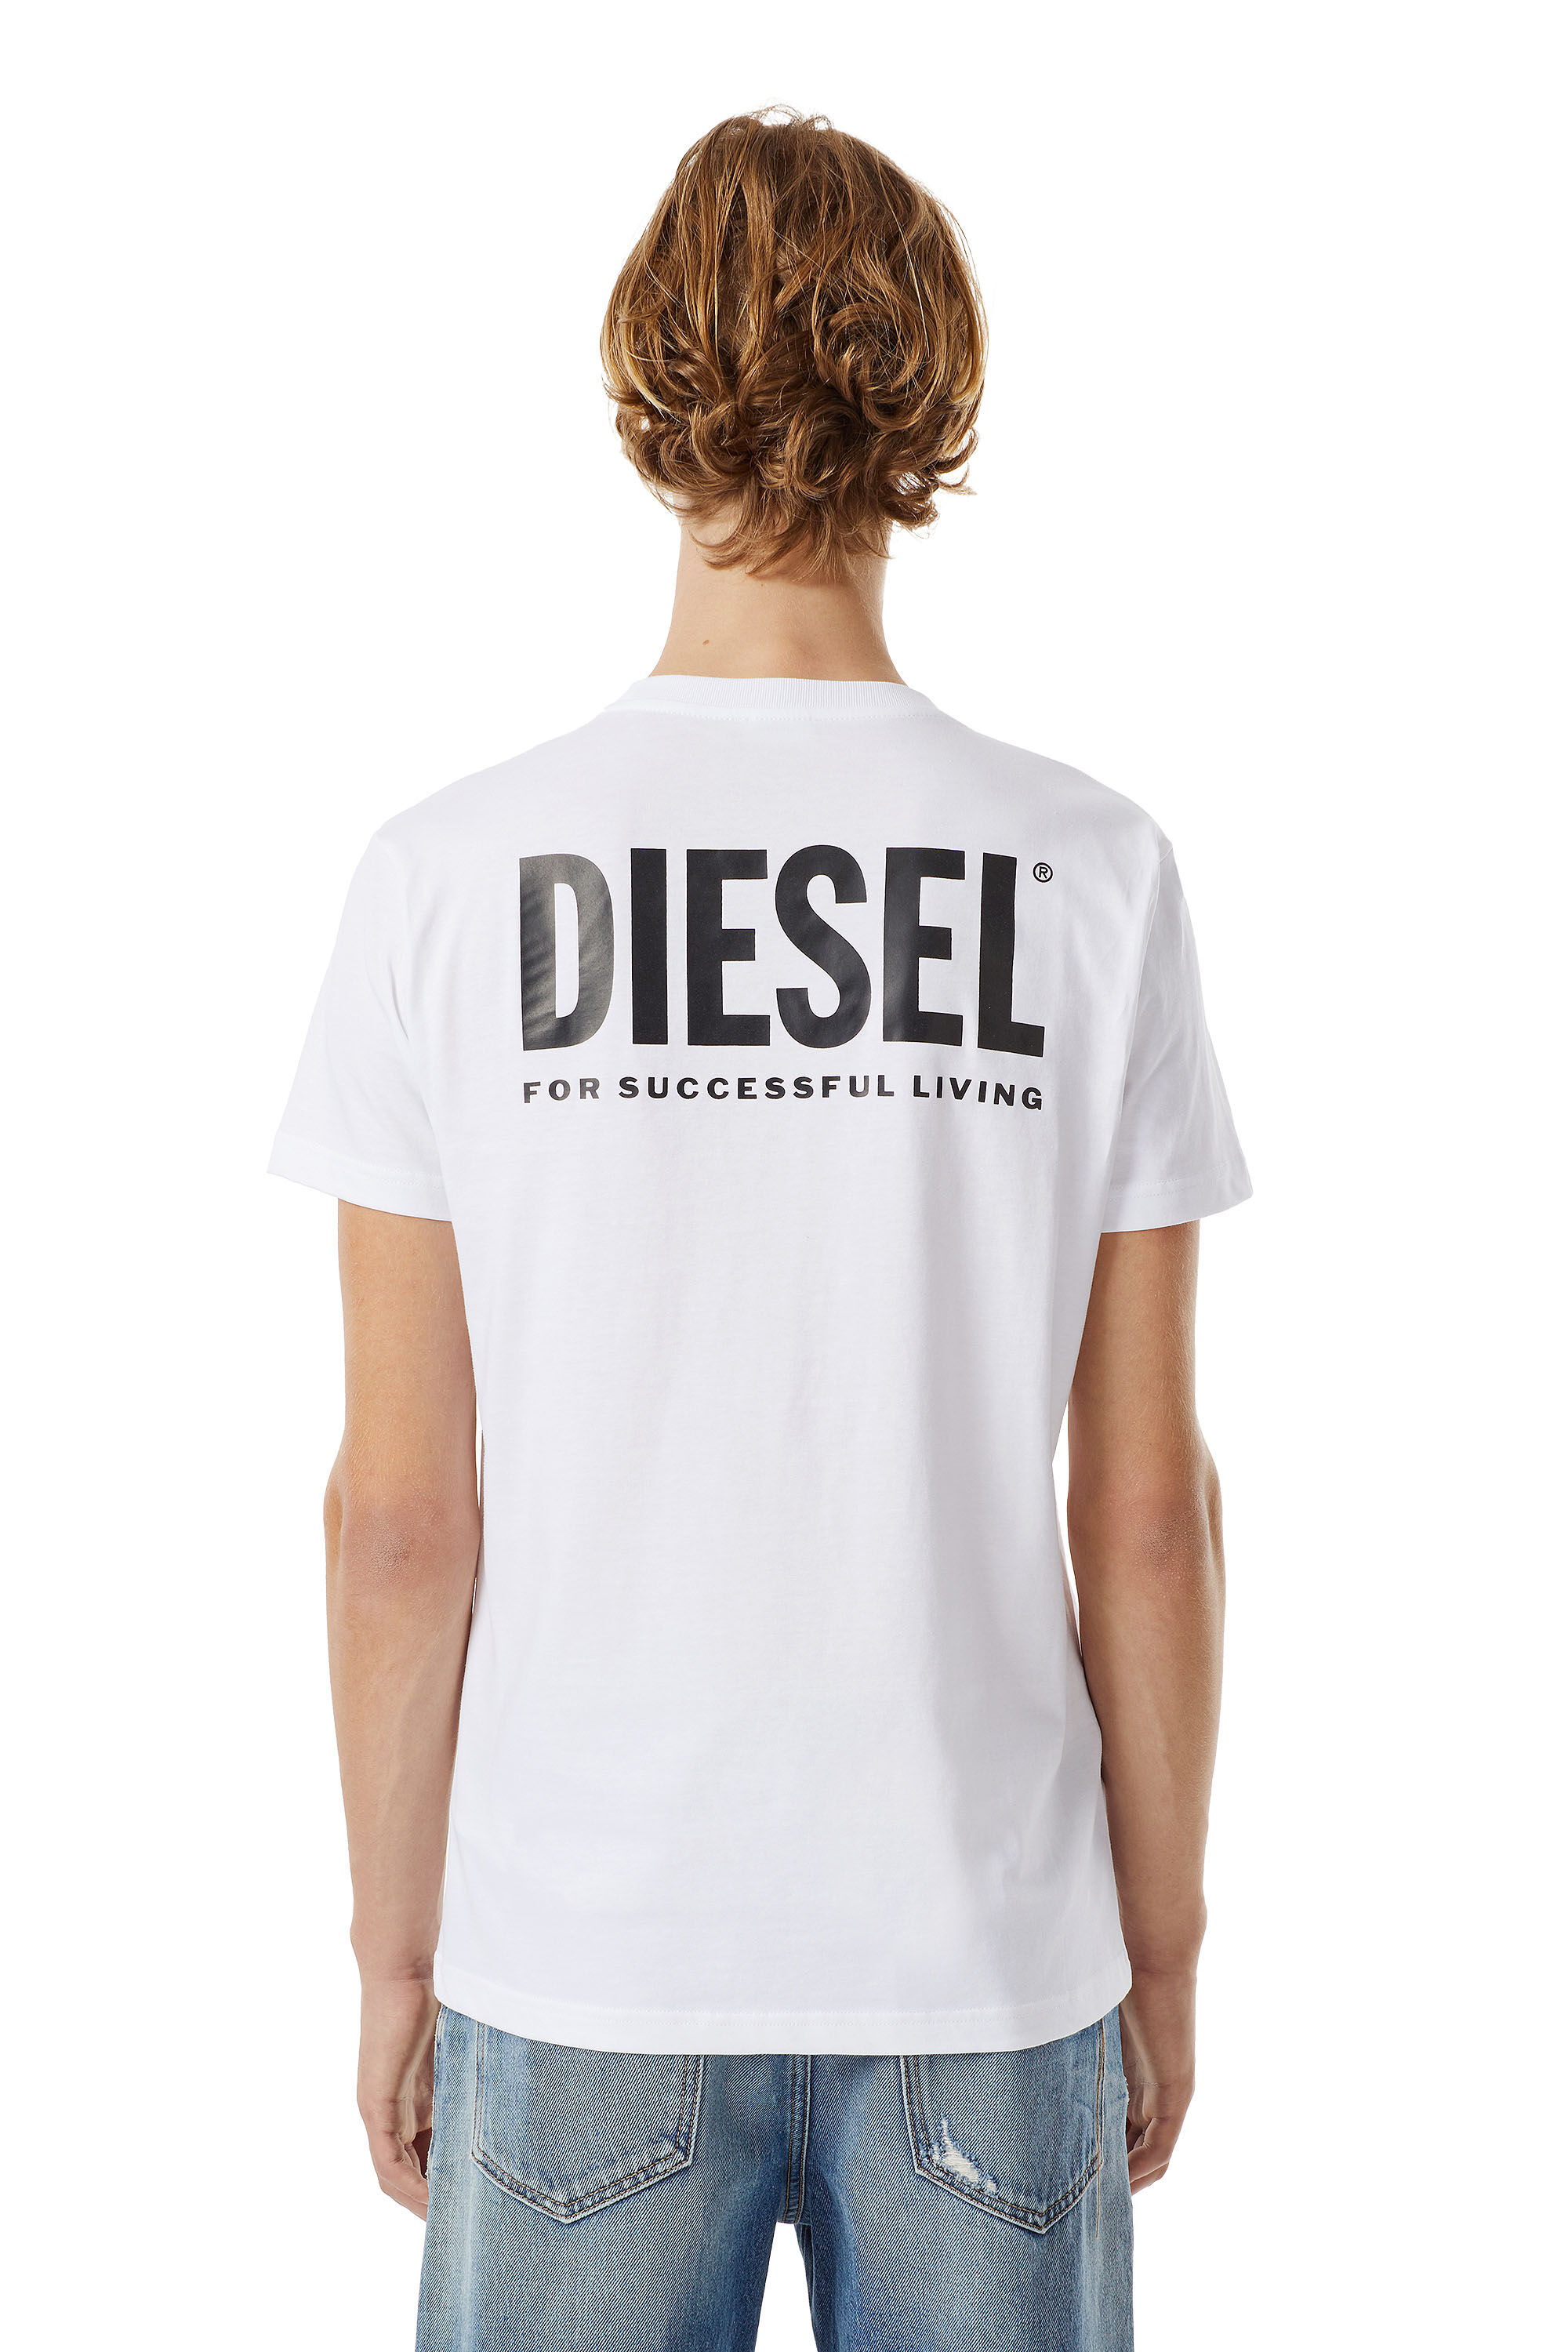 Diesel - LR-T-DIEGO-VIC, White - Image 3